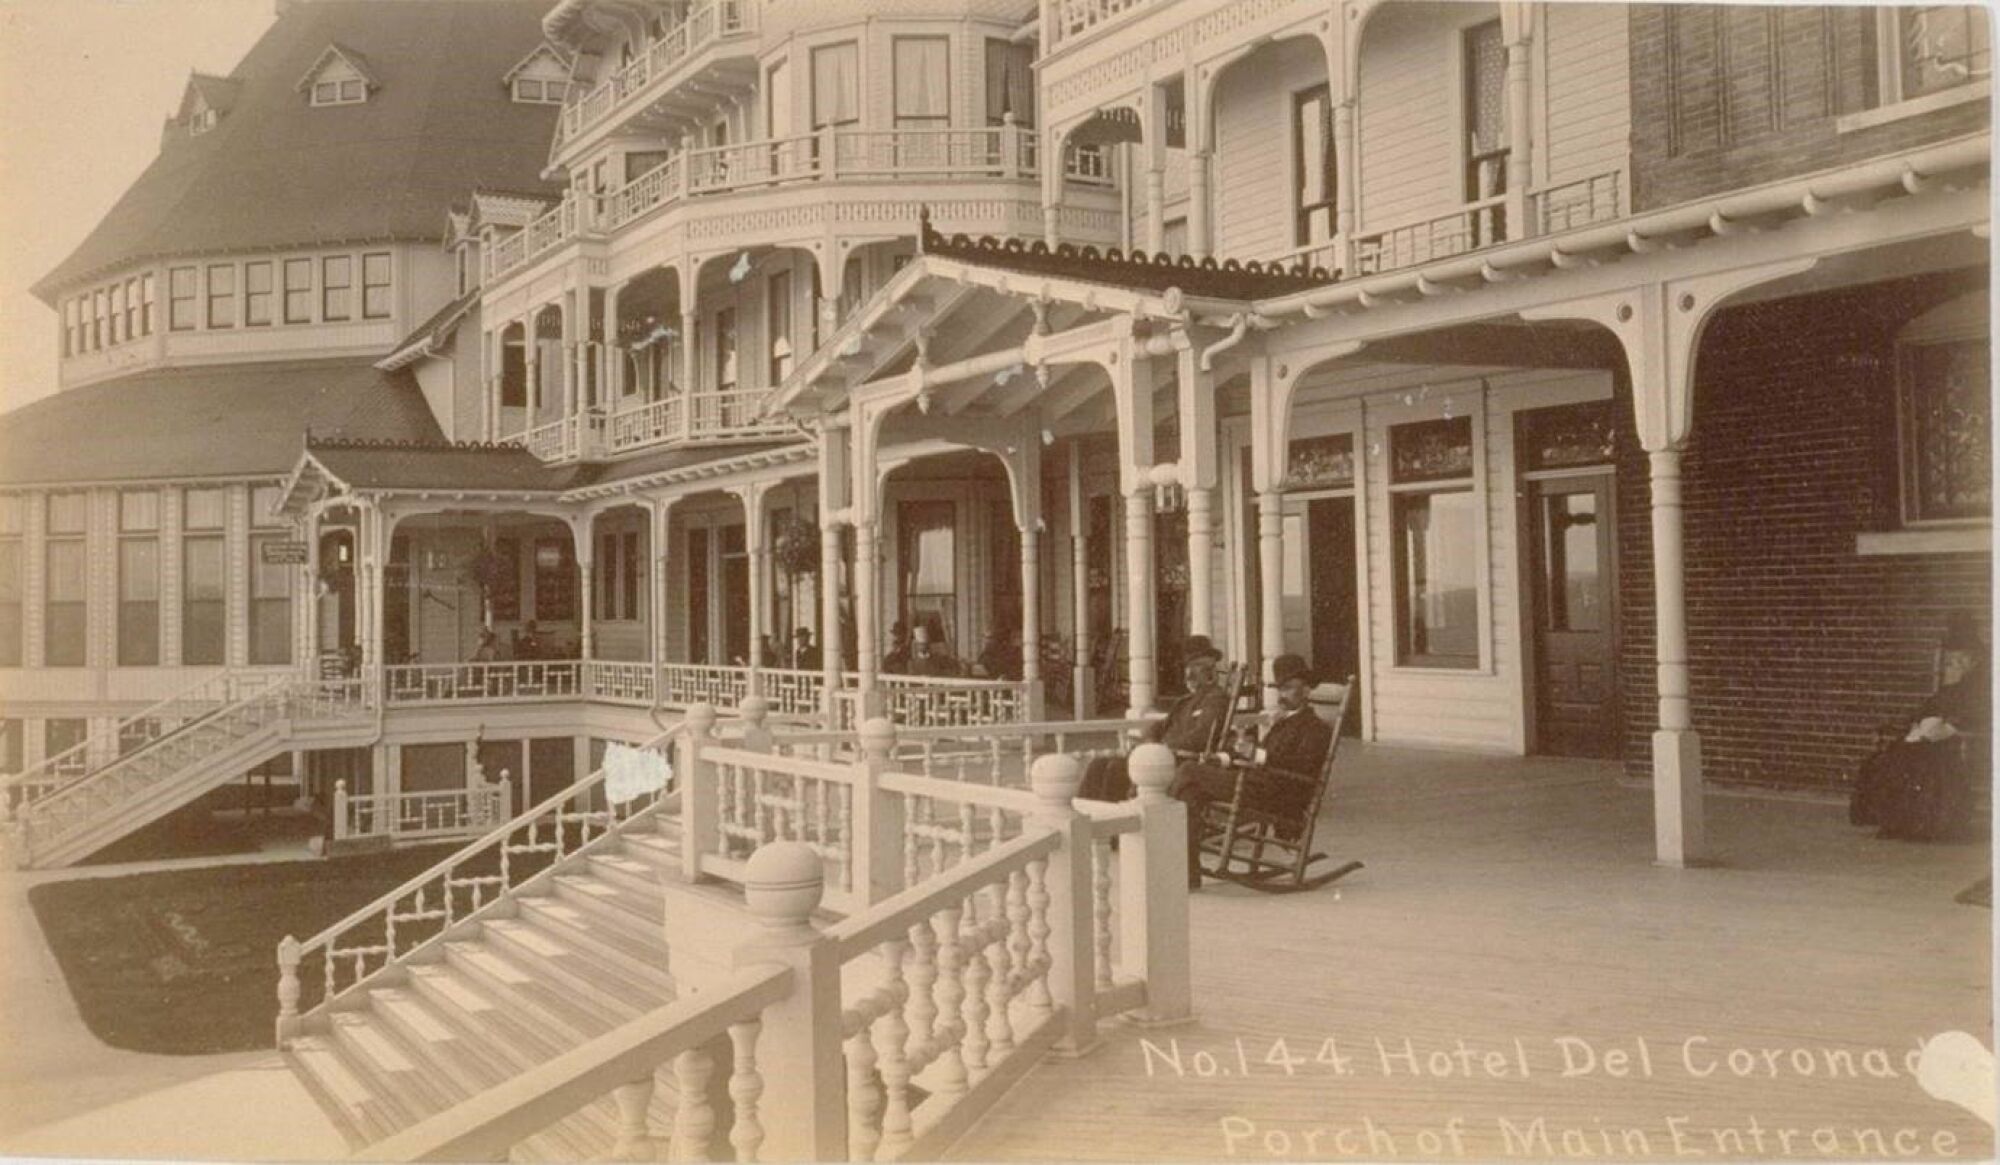 The Hotel Del Coronado's original front porch